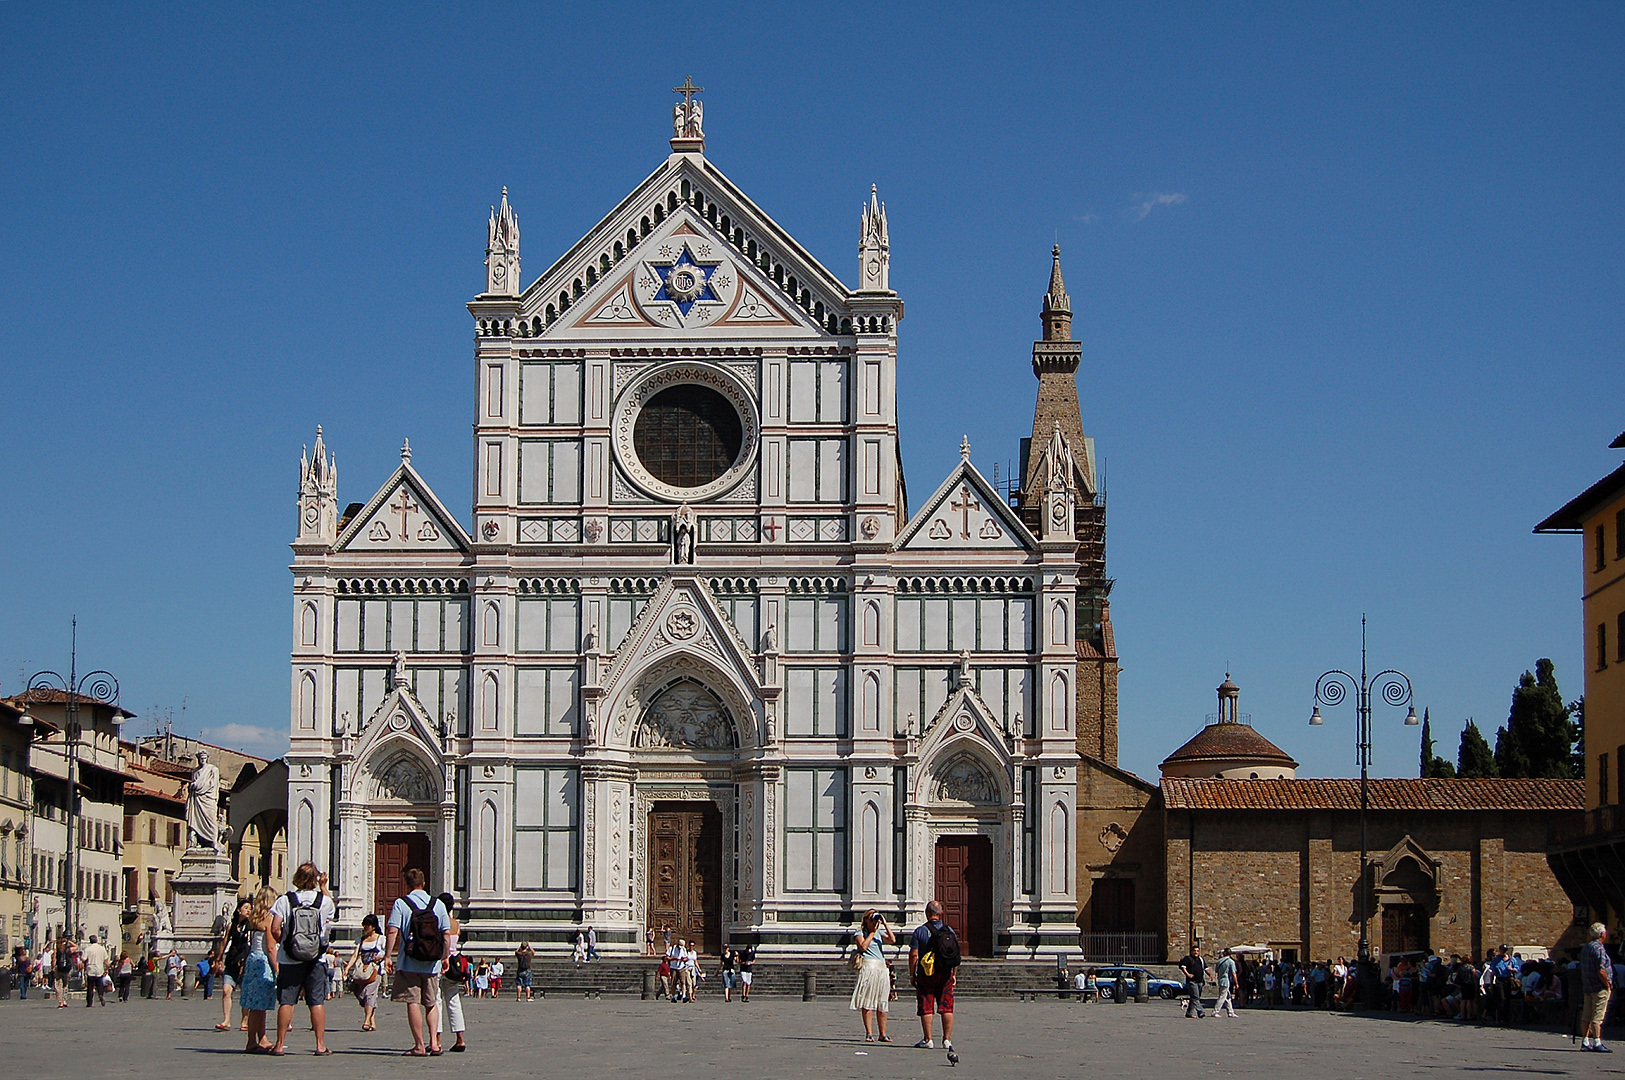 Santa Croce, Florence; Basilica di Santa Croce, Florence, Italy